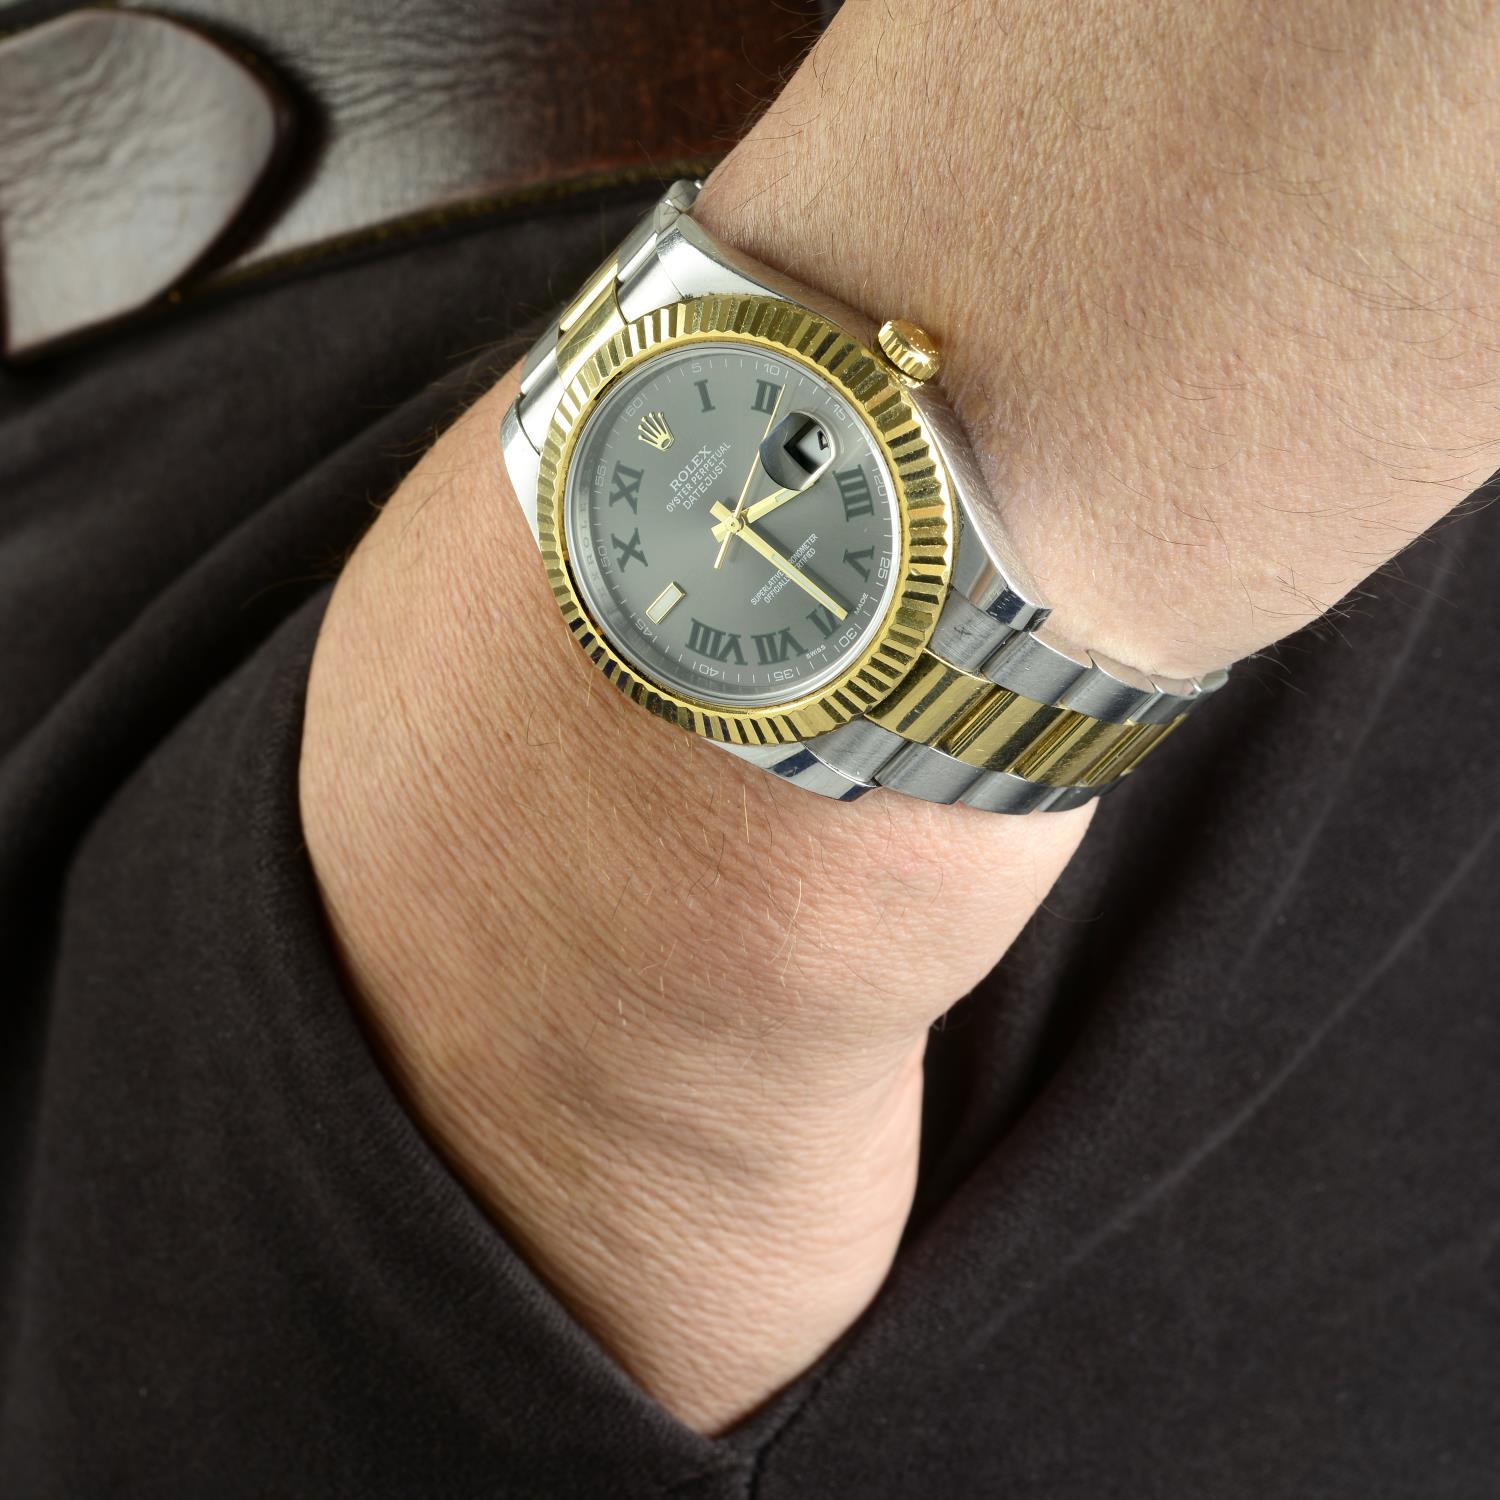 ROLEX - a gentleman's Oyster Perpetual Datejust II bracelet watch. - Image 3 of 4